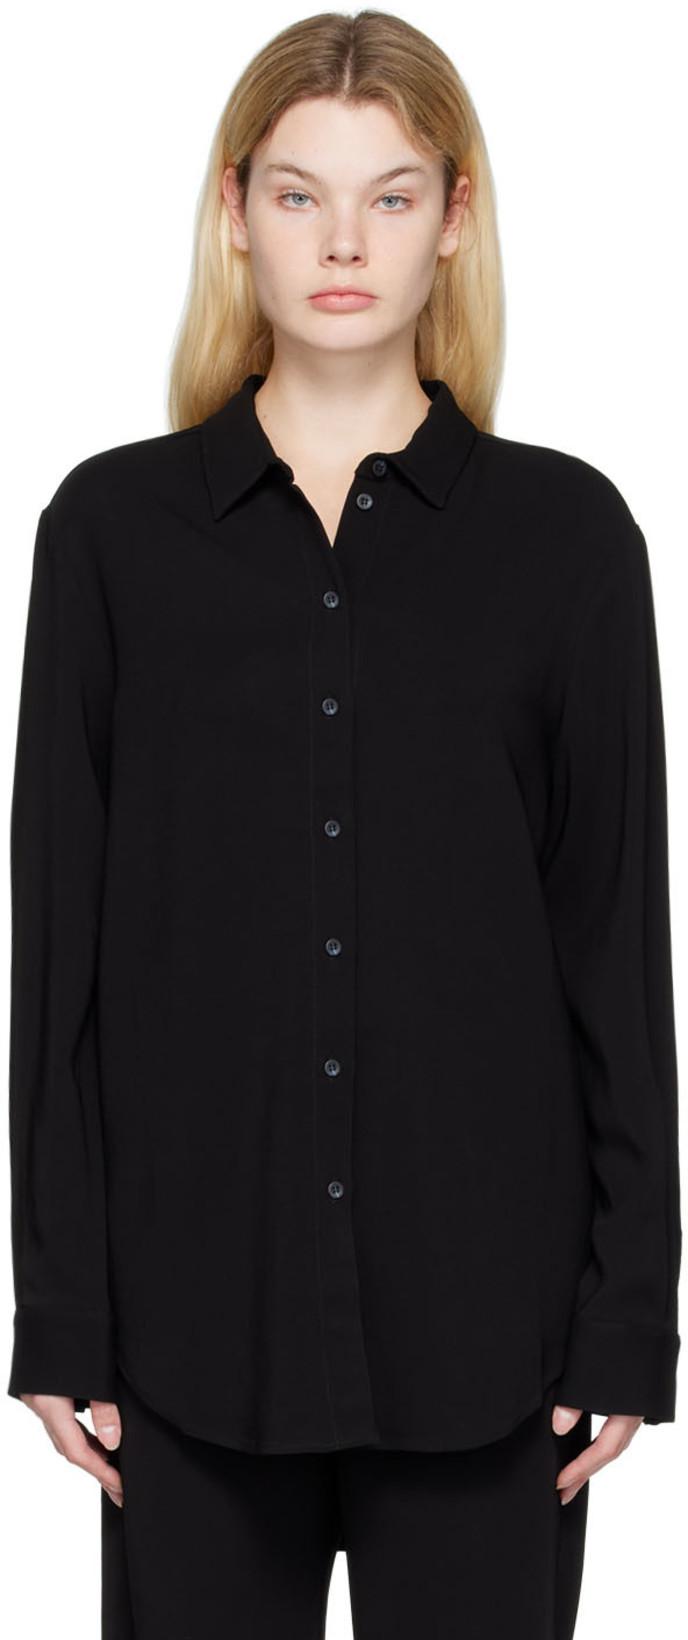 Black London Pyjama Shirt by ASCENO